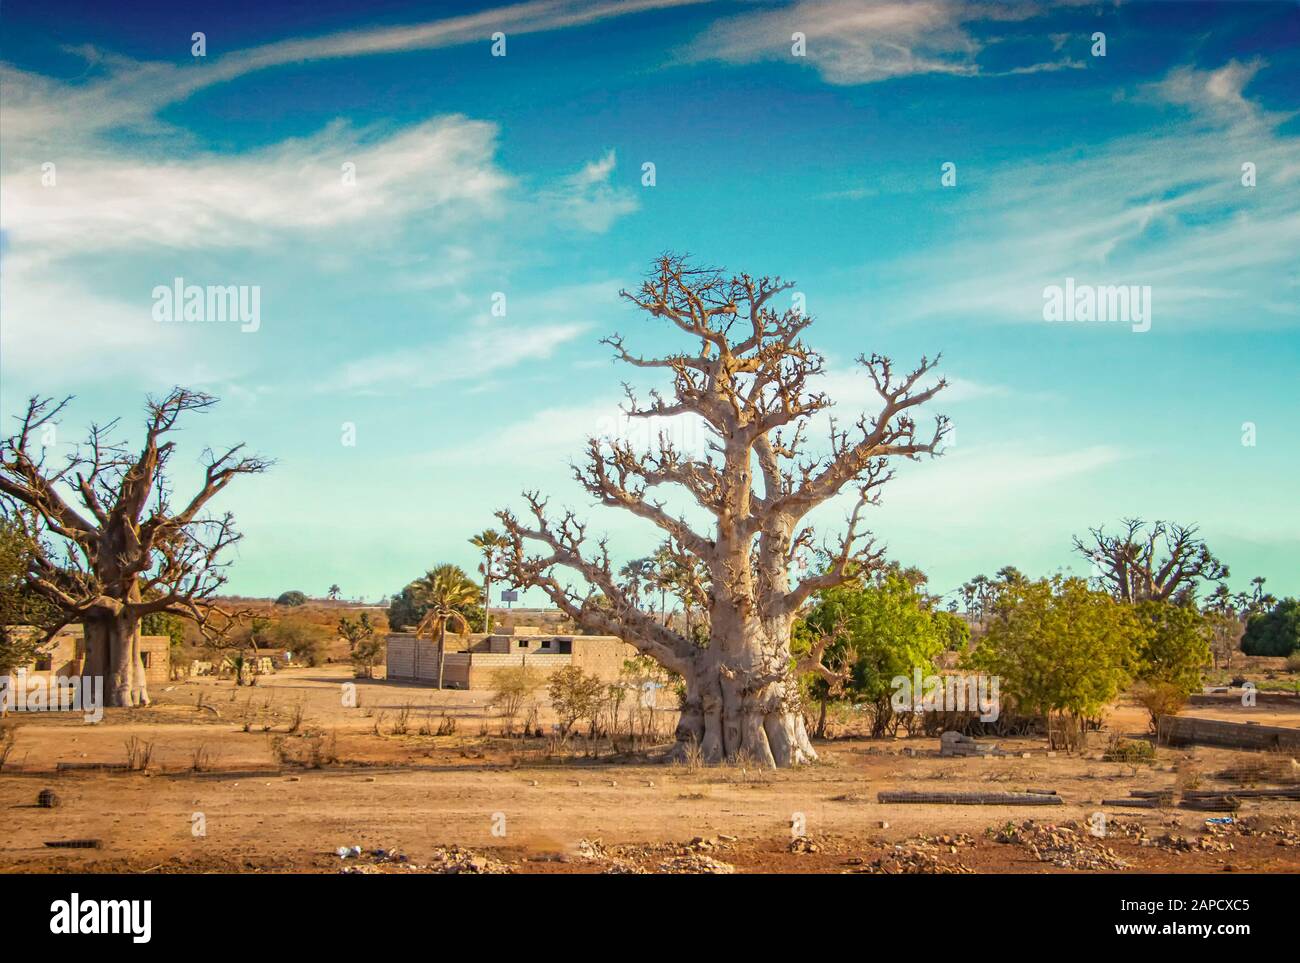 Sabana africana con árbol típico de baobab en Senegal, África. Está cerca de Dakar. En el fondo hay un cielo azul. Foto de stock